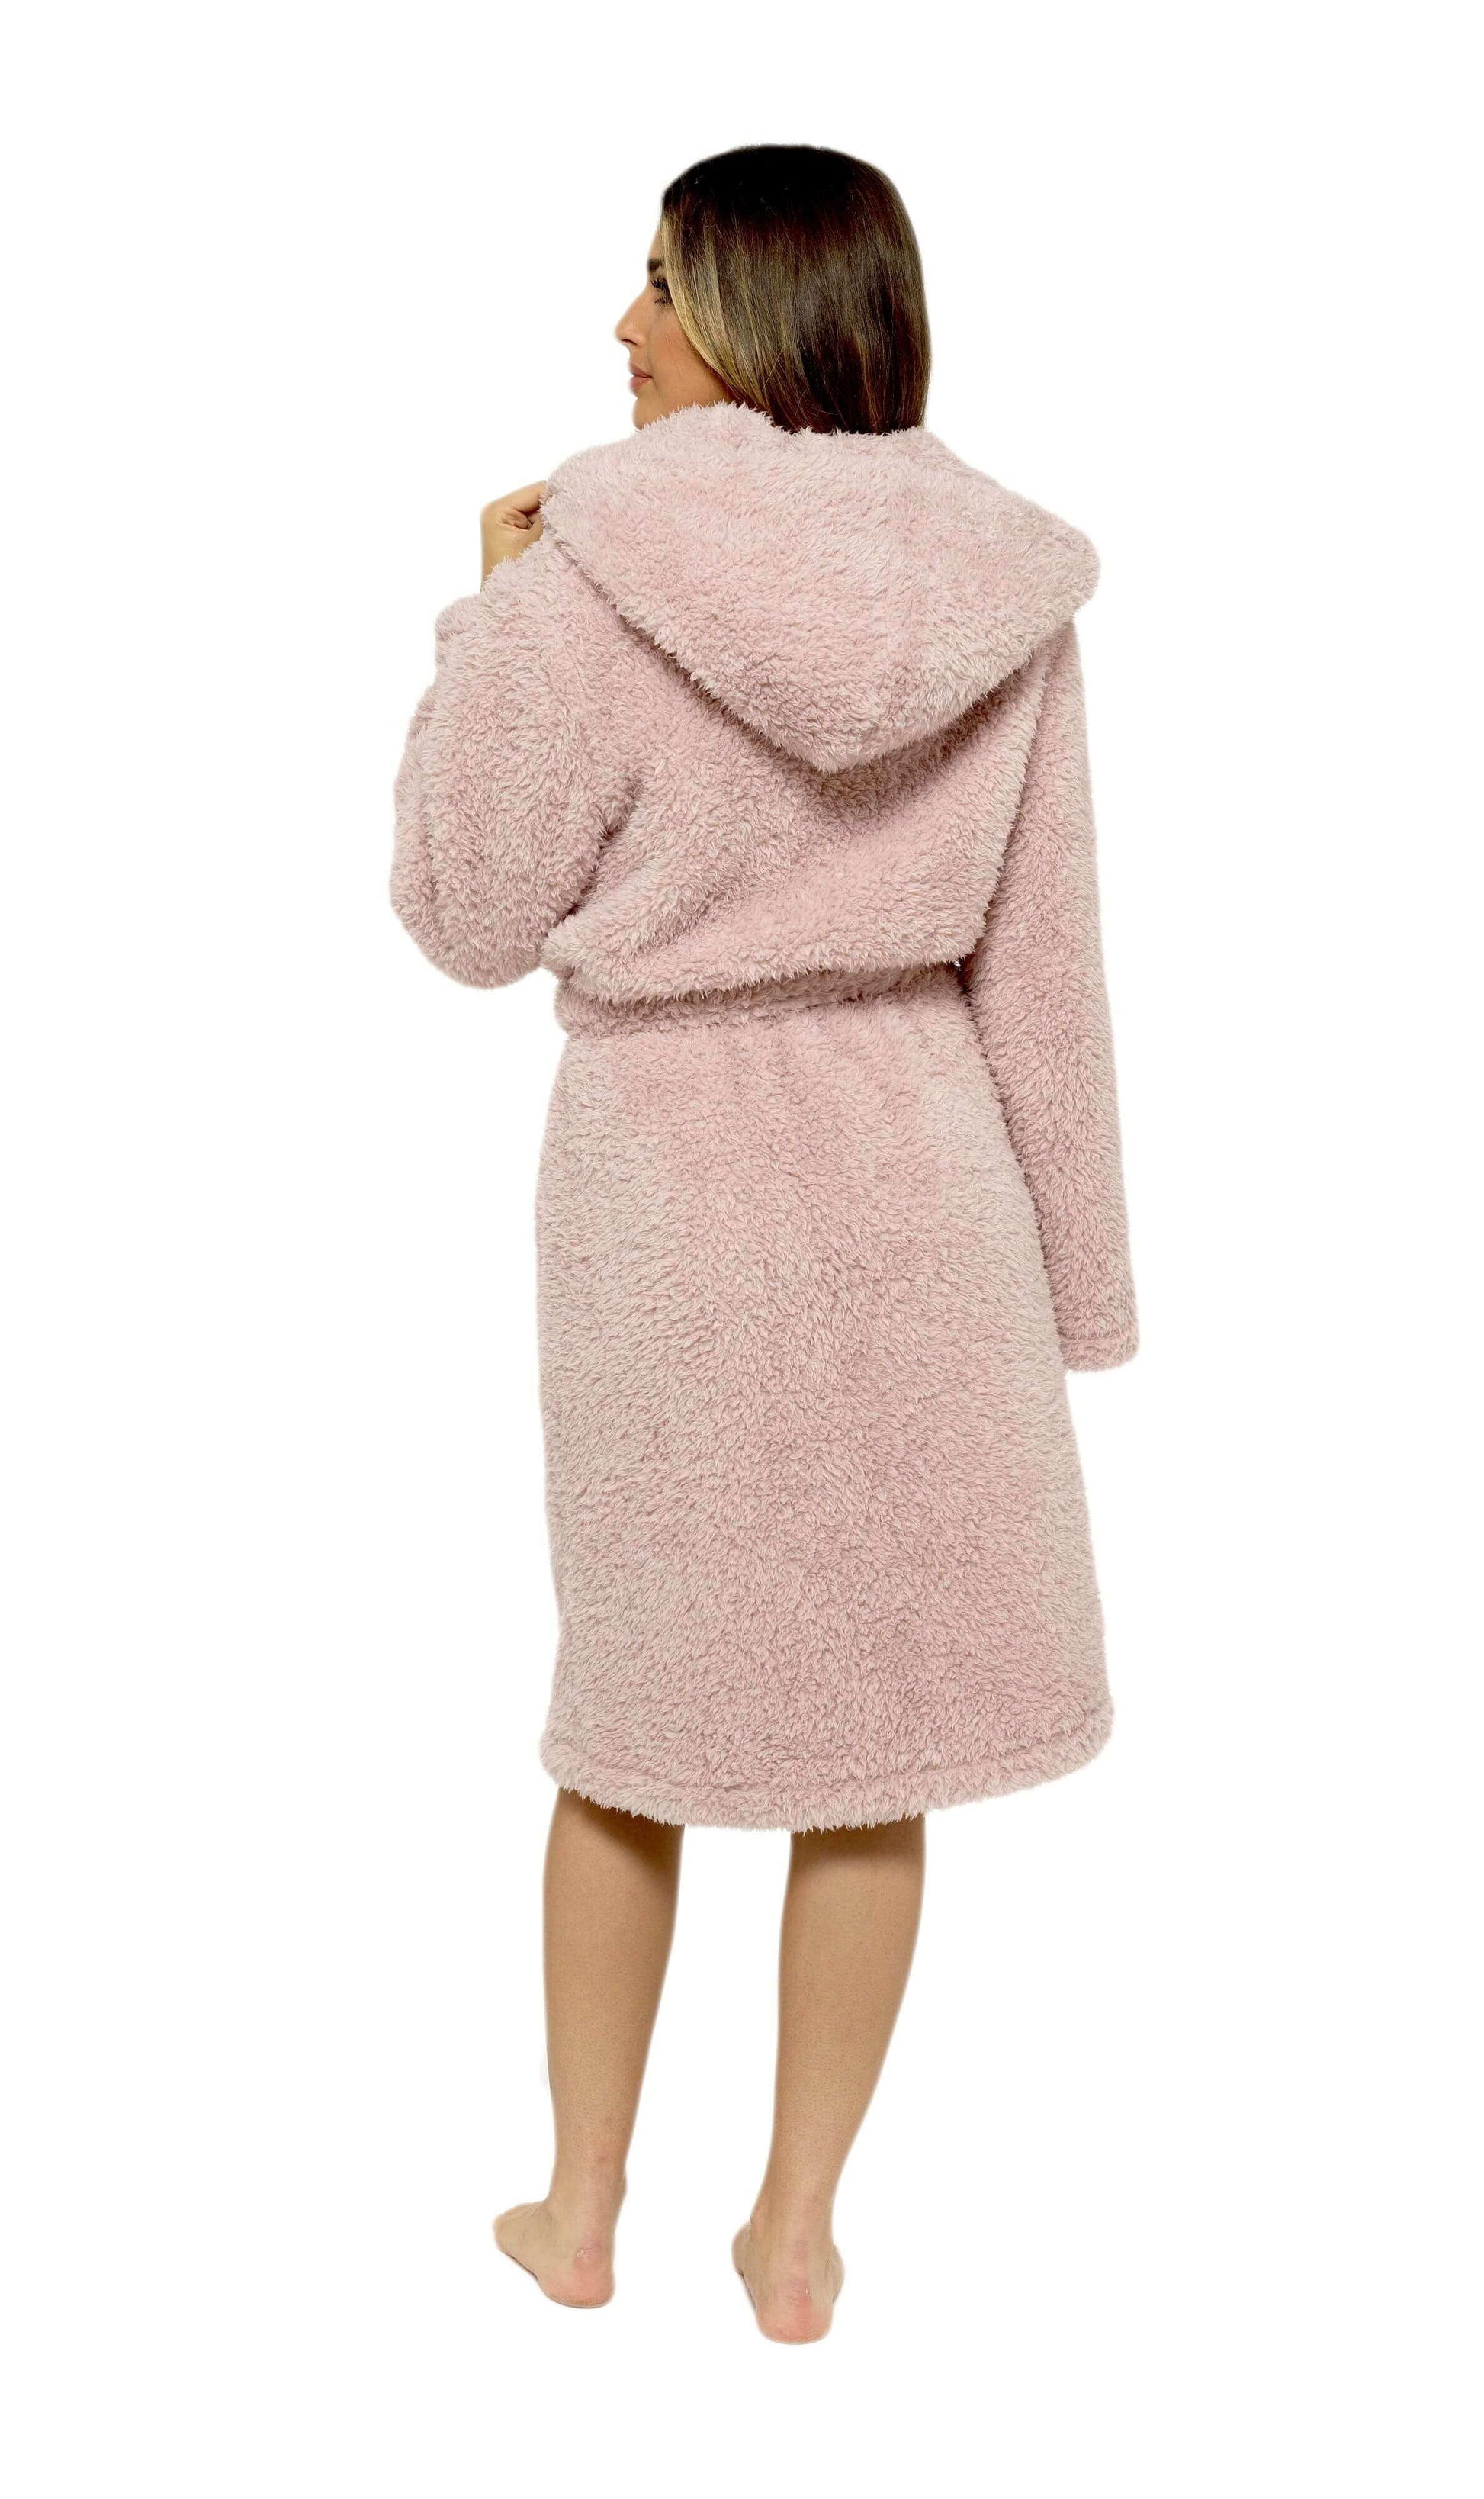 Women's Dusky Pink Teddy Fleece Hooded Robe Dressing Gown, Ladies Bath Robe Loungewear. Buy now for £20.00. A Robe by Daisy Dreamer. 12-14, 16-18, 20-22, 8-10, bridesmaid, daisy dreamer, dressing gown, dusky pink, fleece, gym, hooded robe, hotel, ladies,